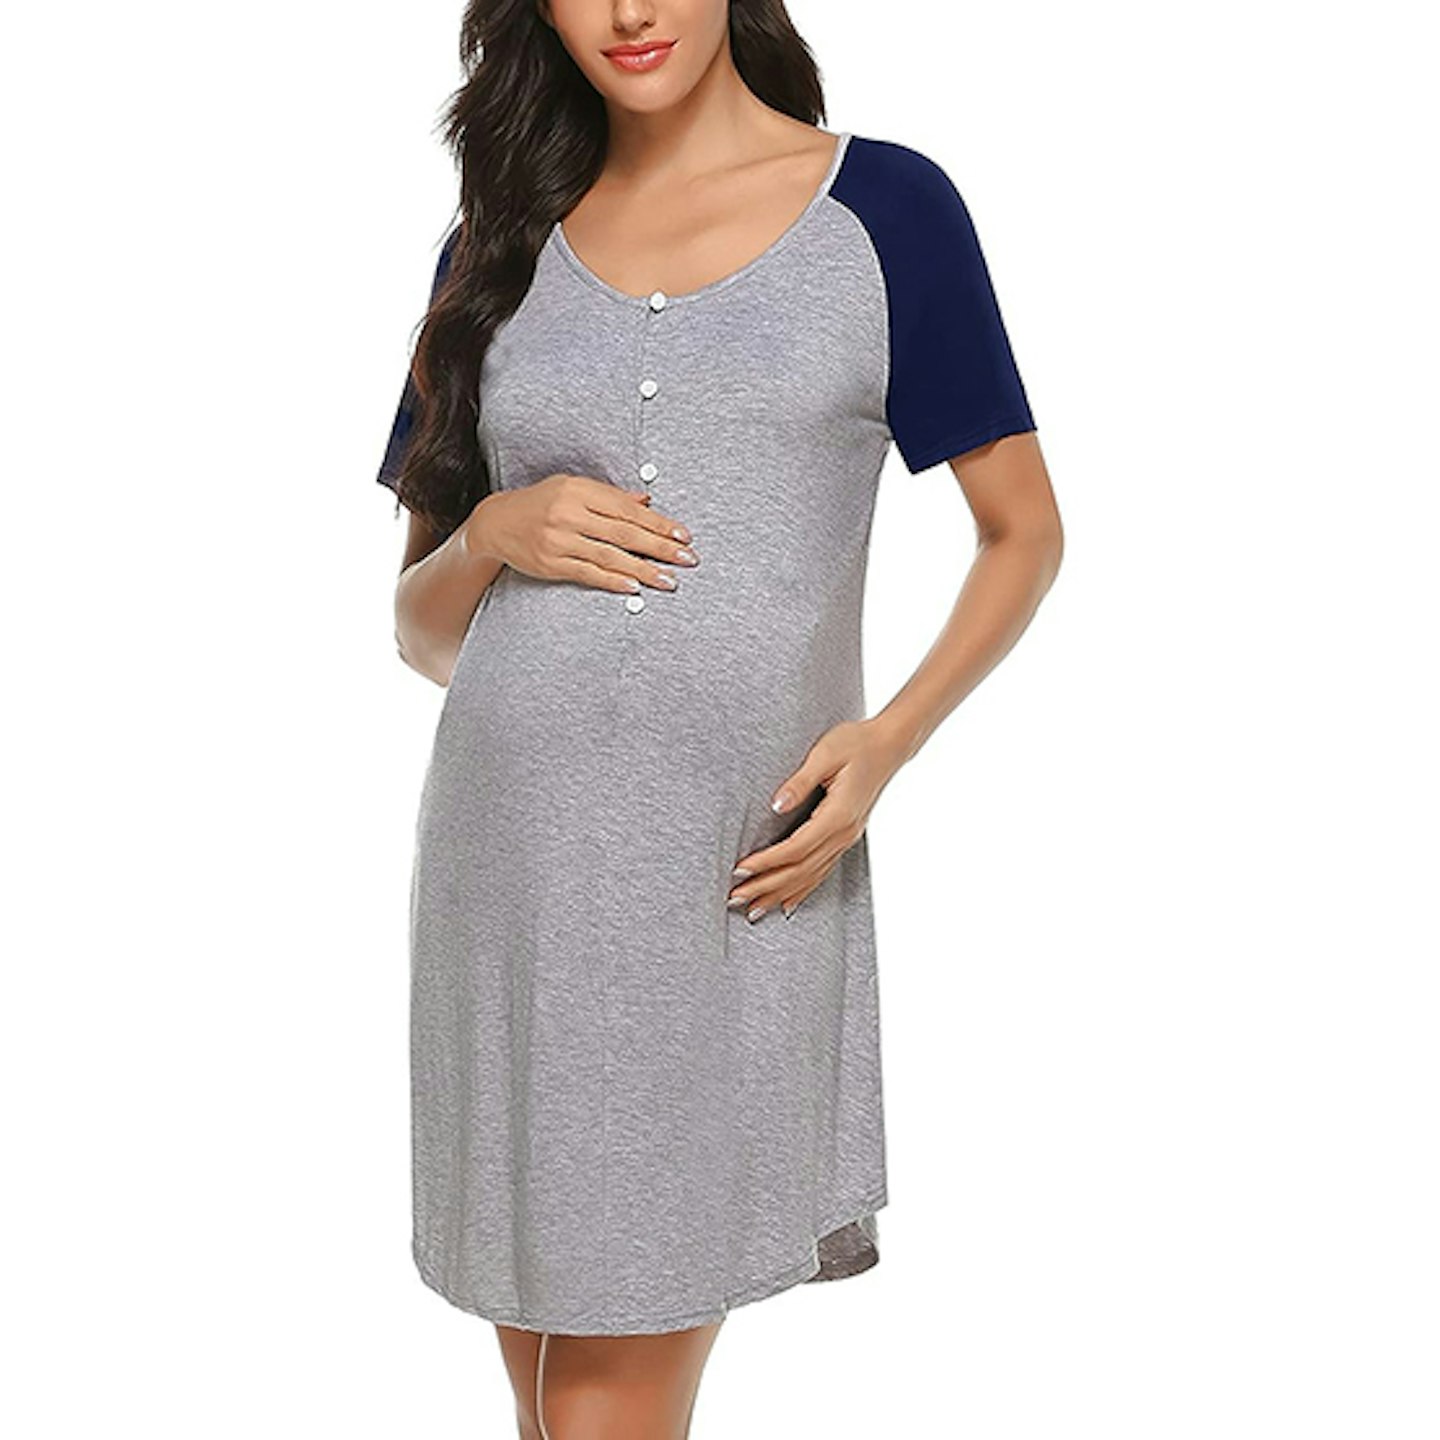 https://images.bauerhosting.com/affiliates/sites/12/2022/03/maternity-nightdress.jpeg?auto=format&w=1440&q=80